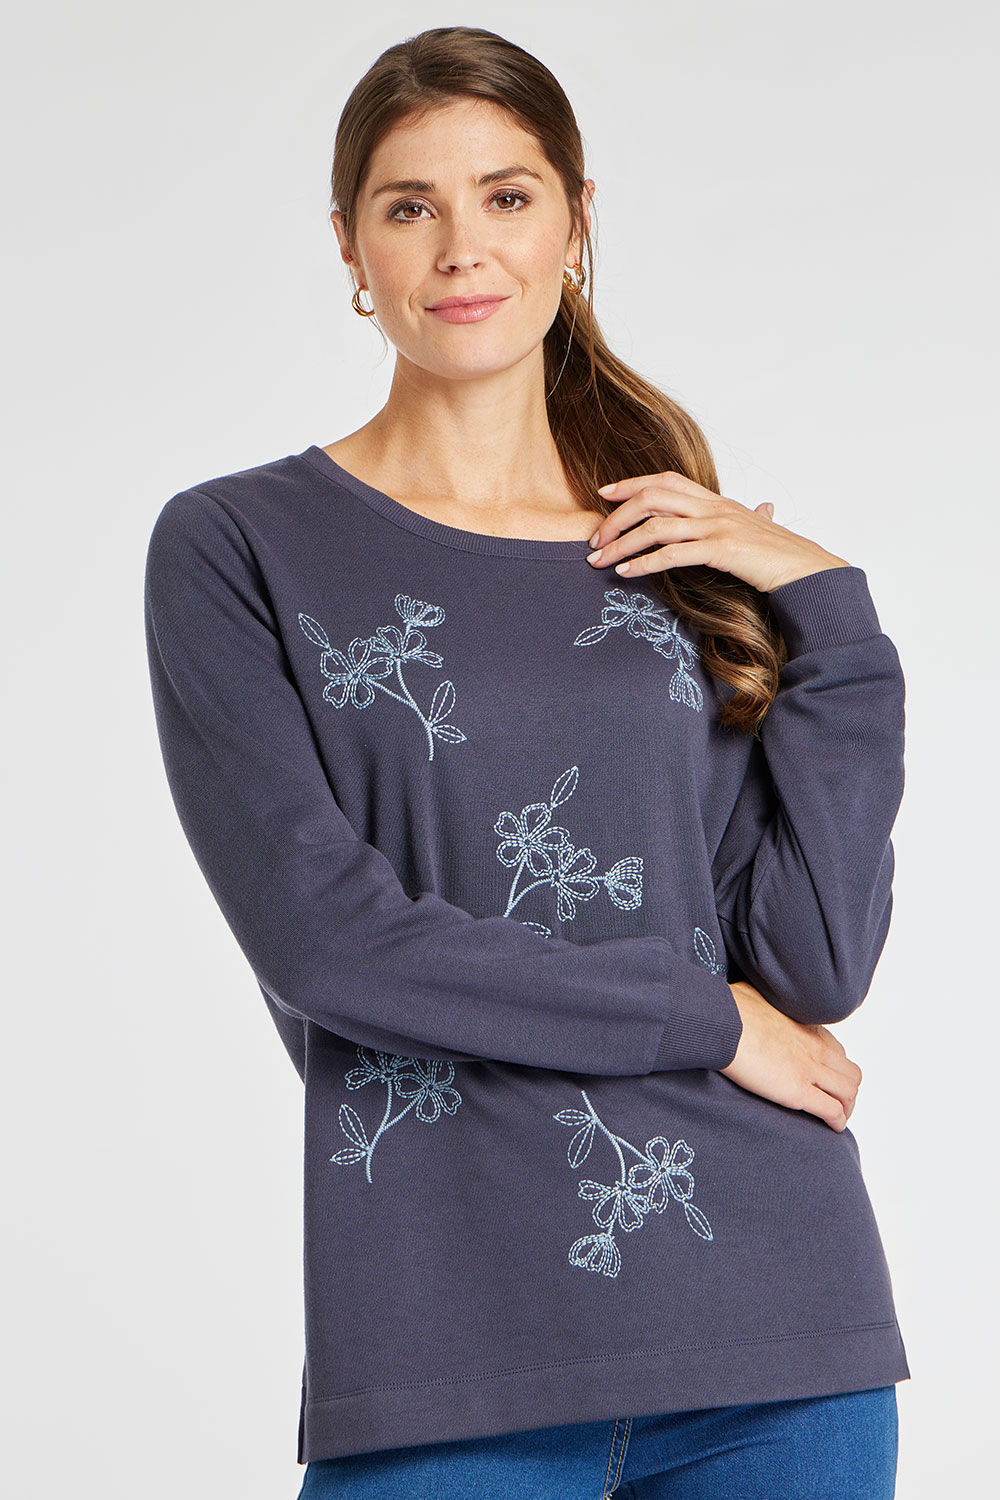 Bonmarche Women’s Navy Blue Floral Embroidered Long Sleeve Tonal Sweatshirt, Size: 16